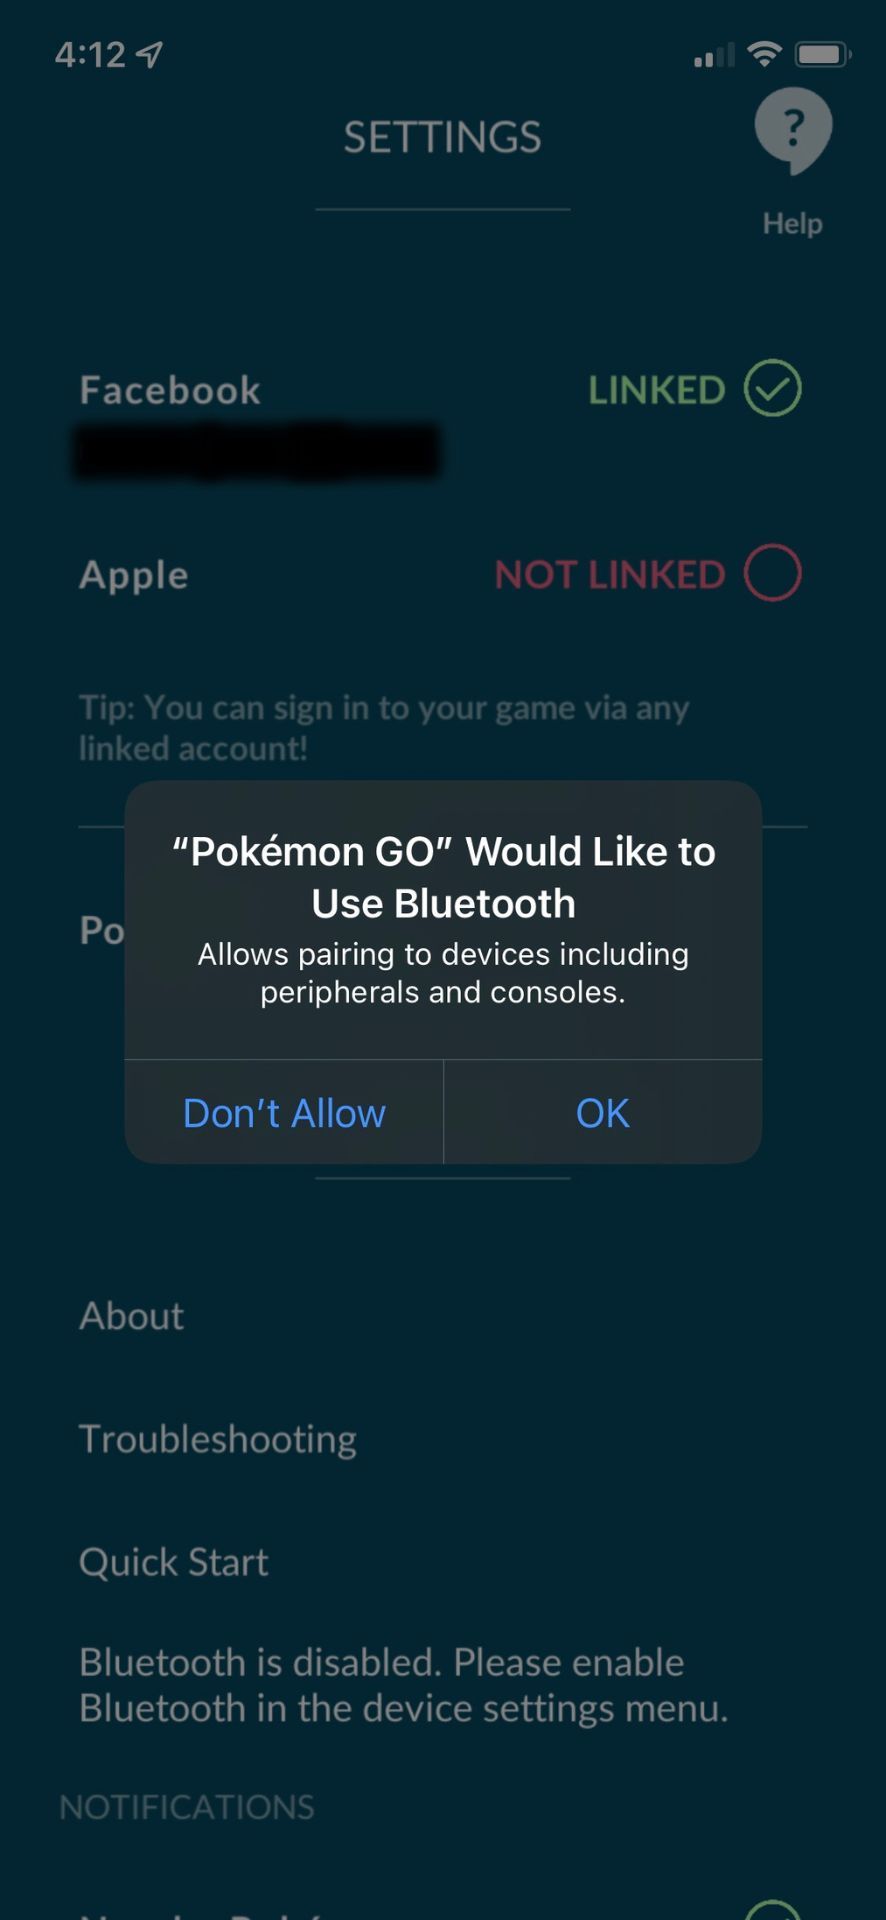 How to connect a Poke ball plus to pokemon go press ok to allow Bluetooth access